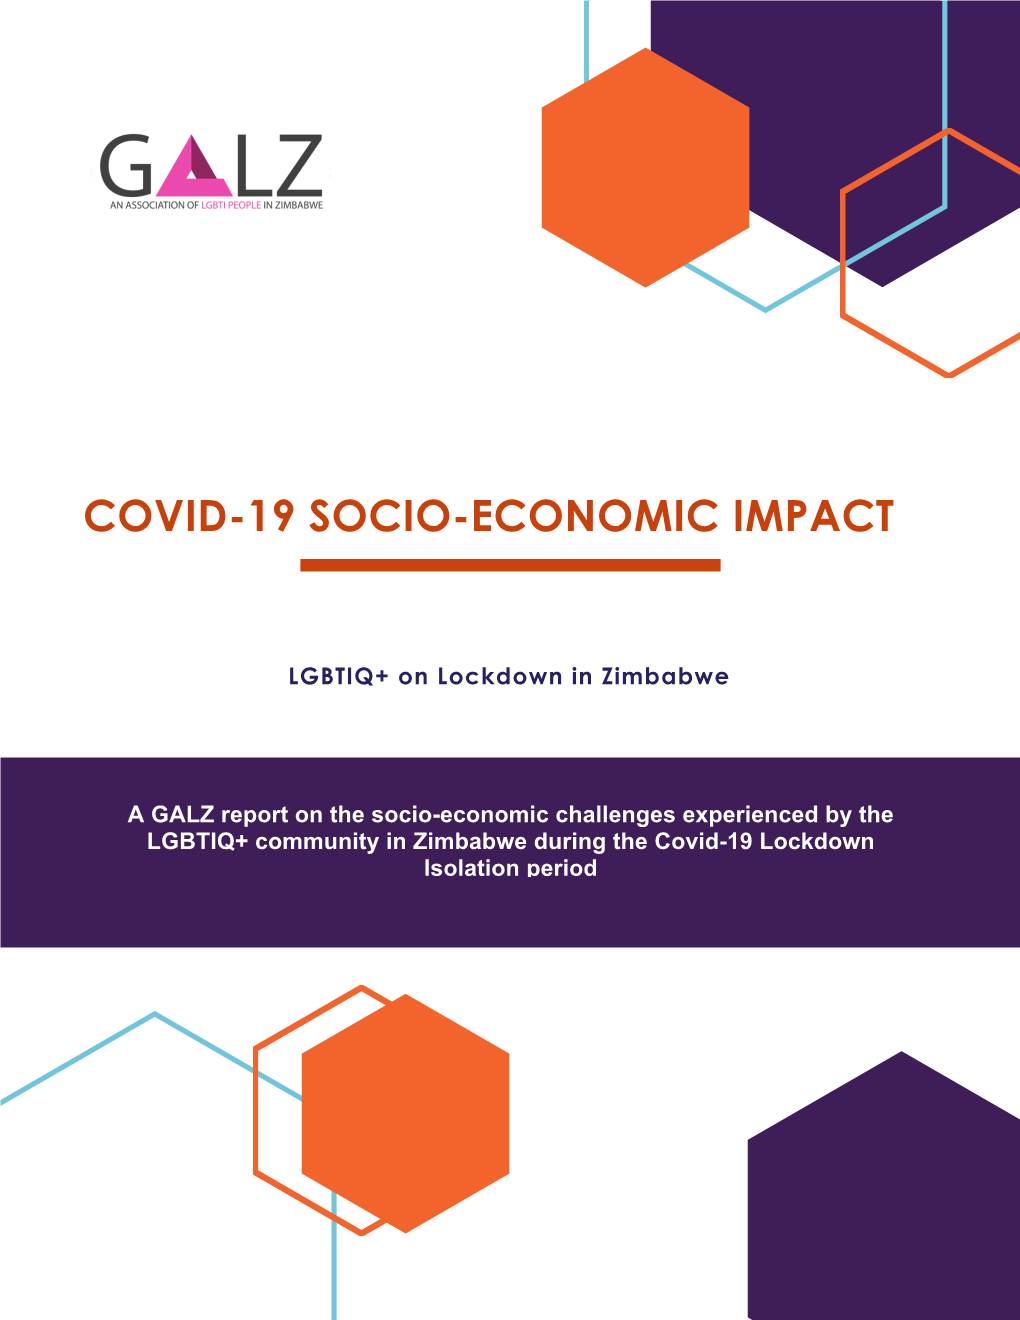 Covid-19 Socio-Economic Impact